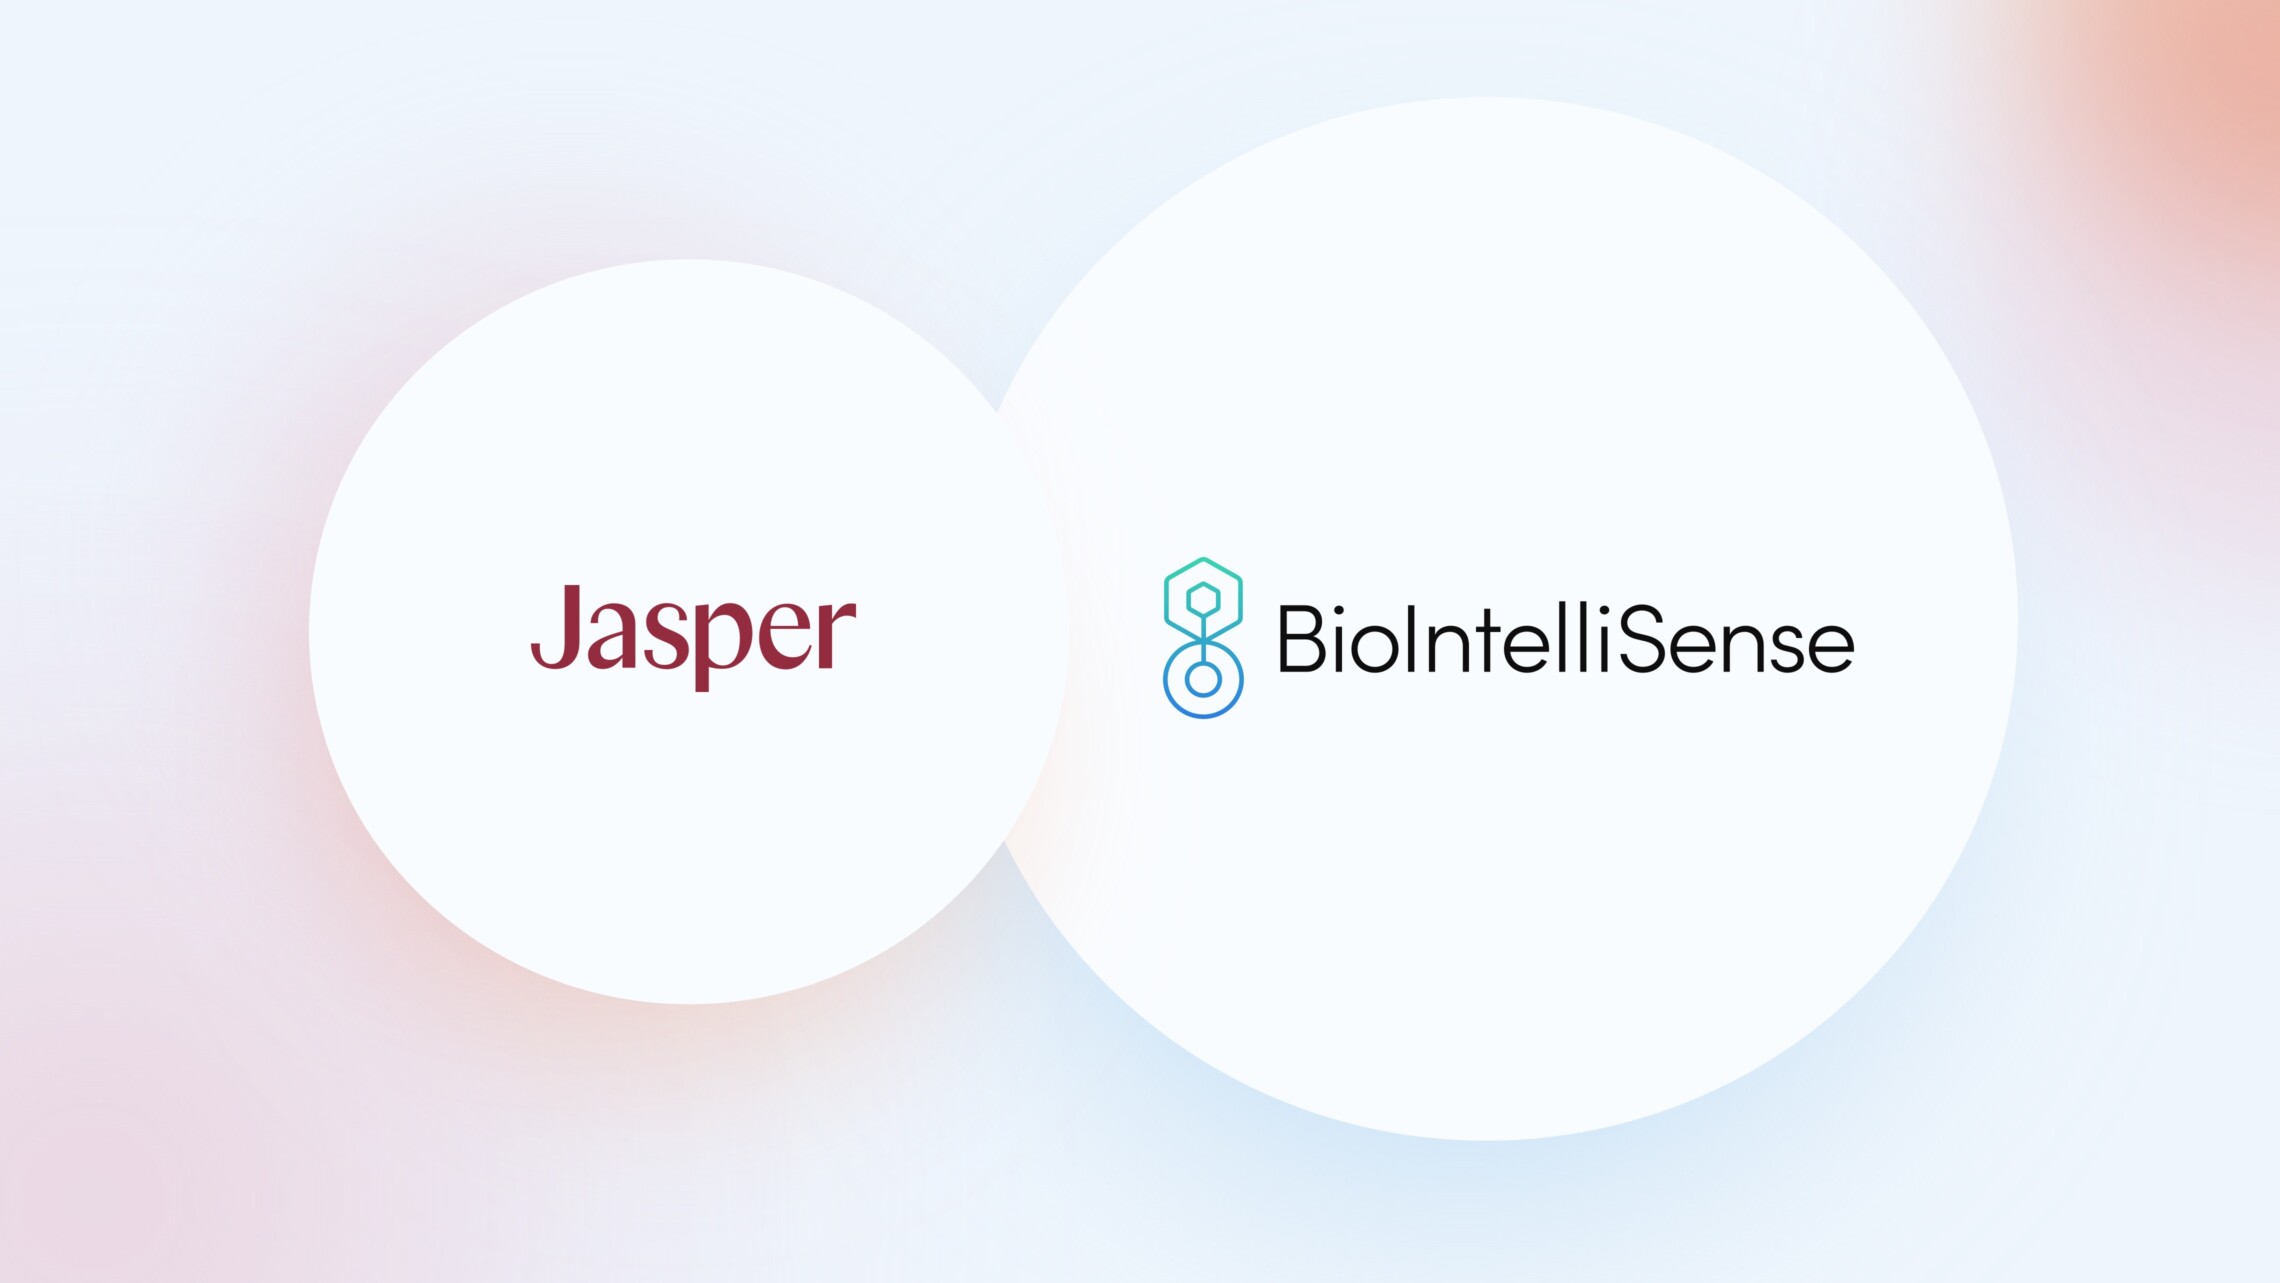 Jasper logo and BioIntelliSense logo in two white circles